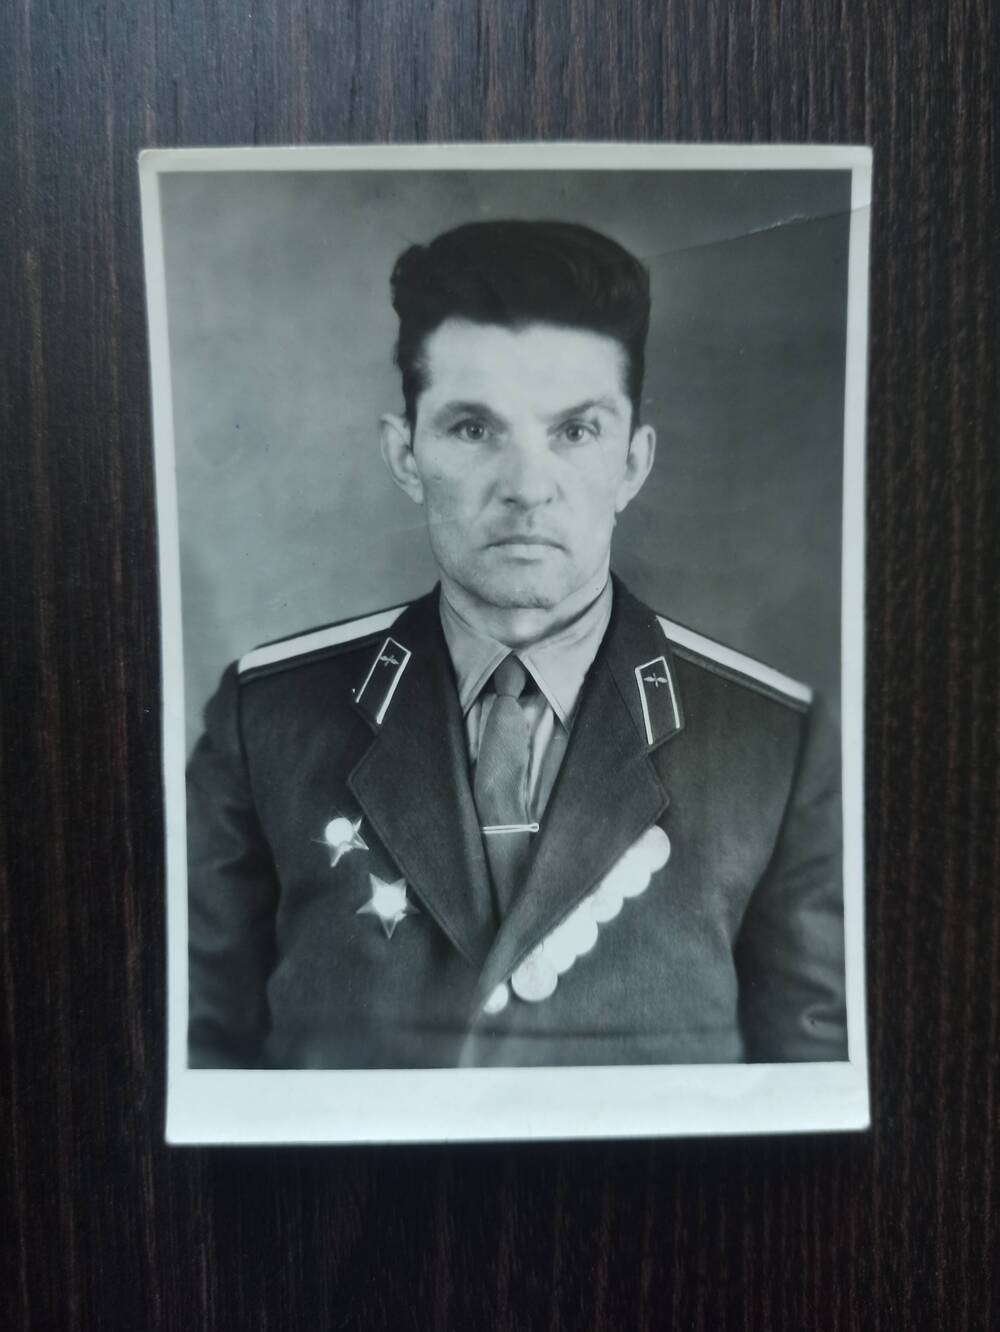 Фото подгрудное. Плешнев Александр Егорович – ветеран ВОВ, снимок от 29.01.1966г.